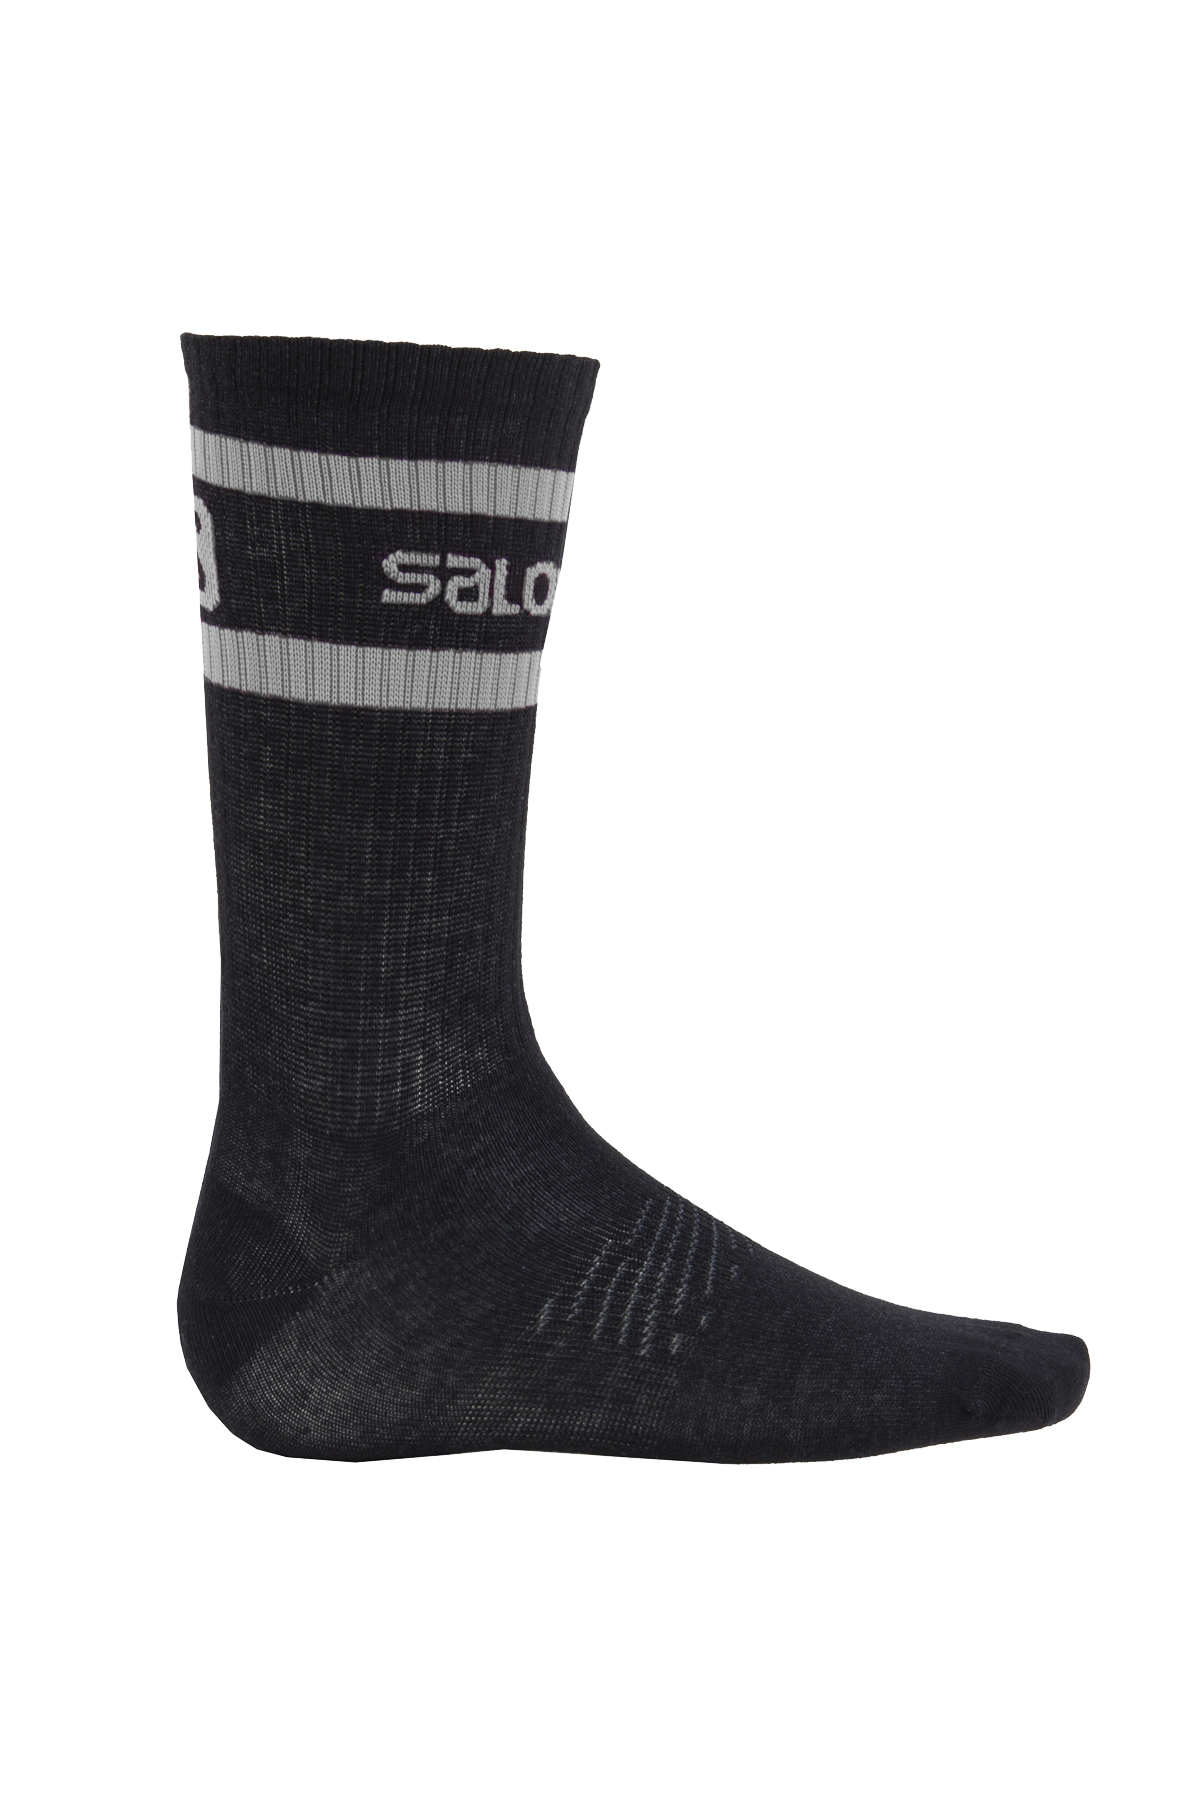 Salomon Life 3P Outdoor Siyah Gri Çorap